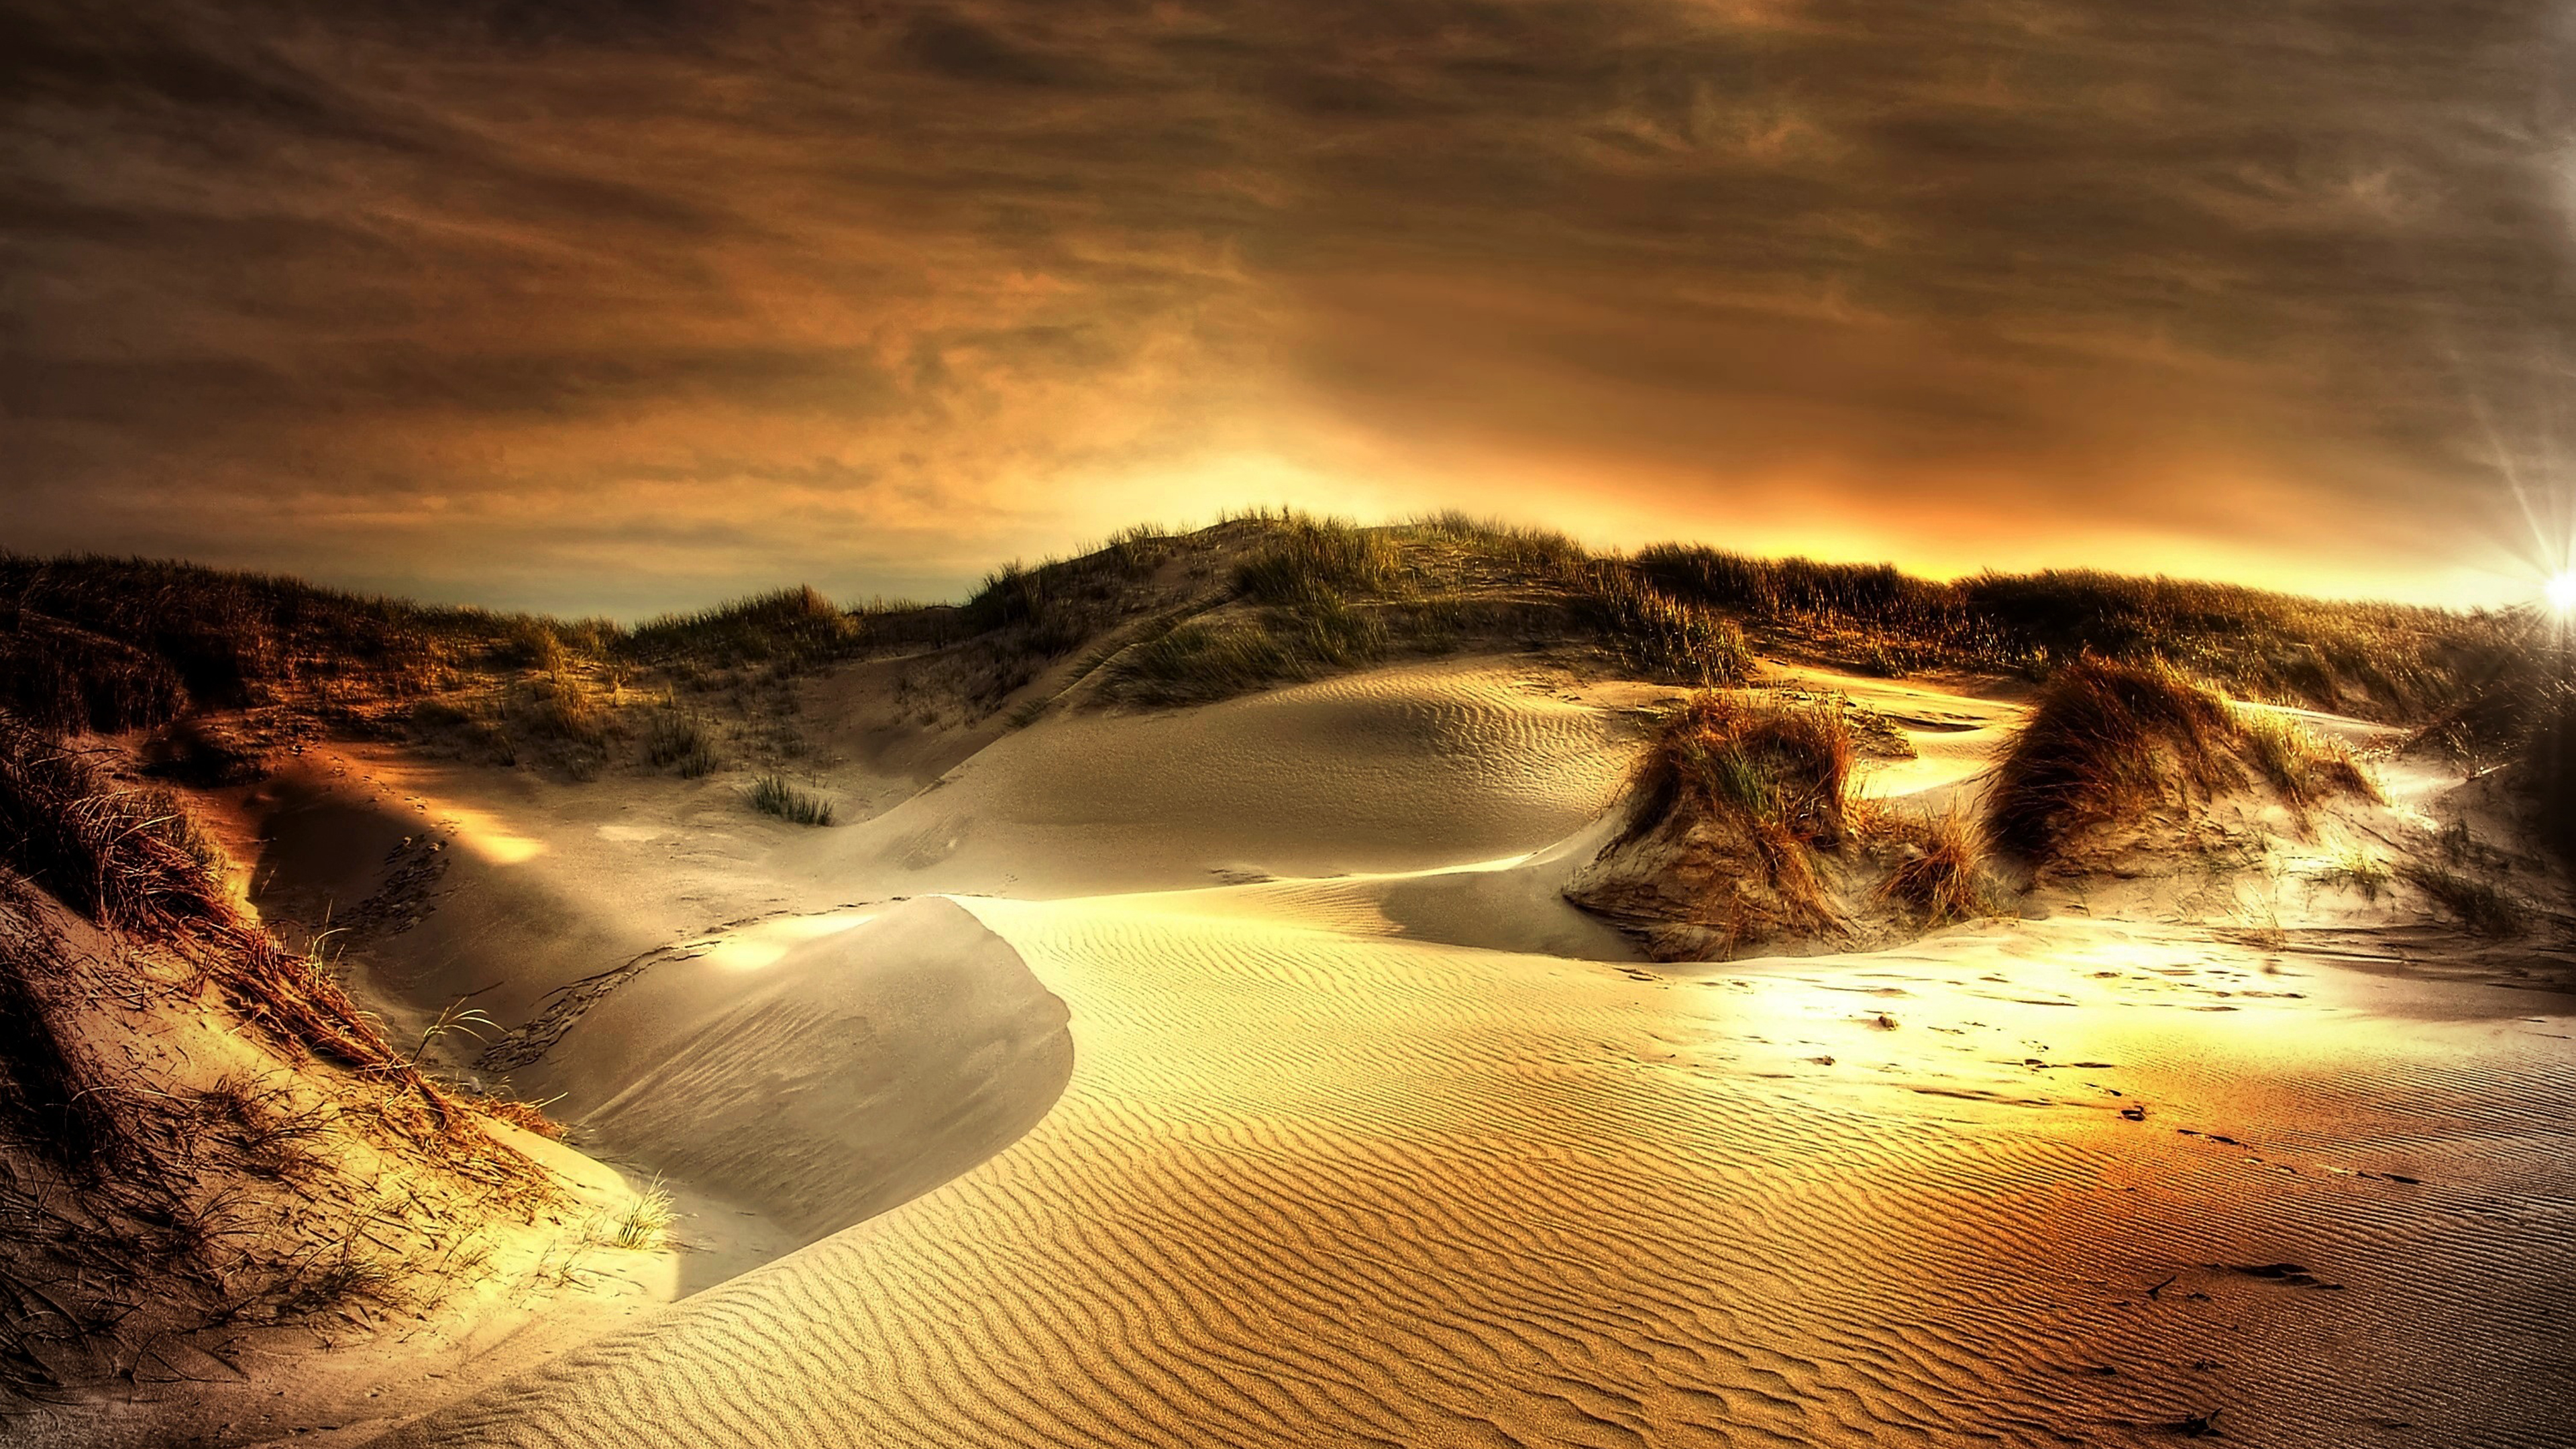 Dusky Sand Dunes 4K Wallpaper | 3840 x 2160 px